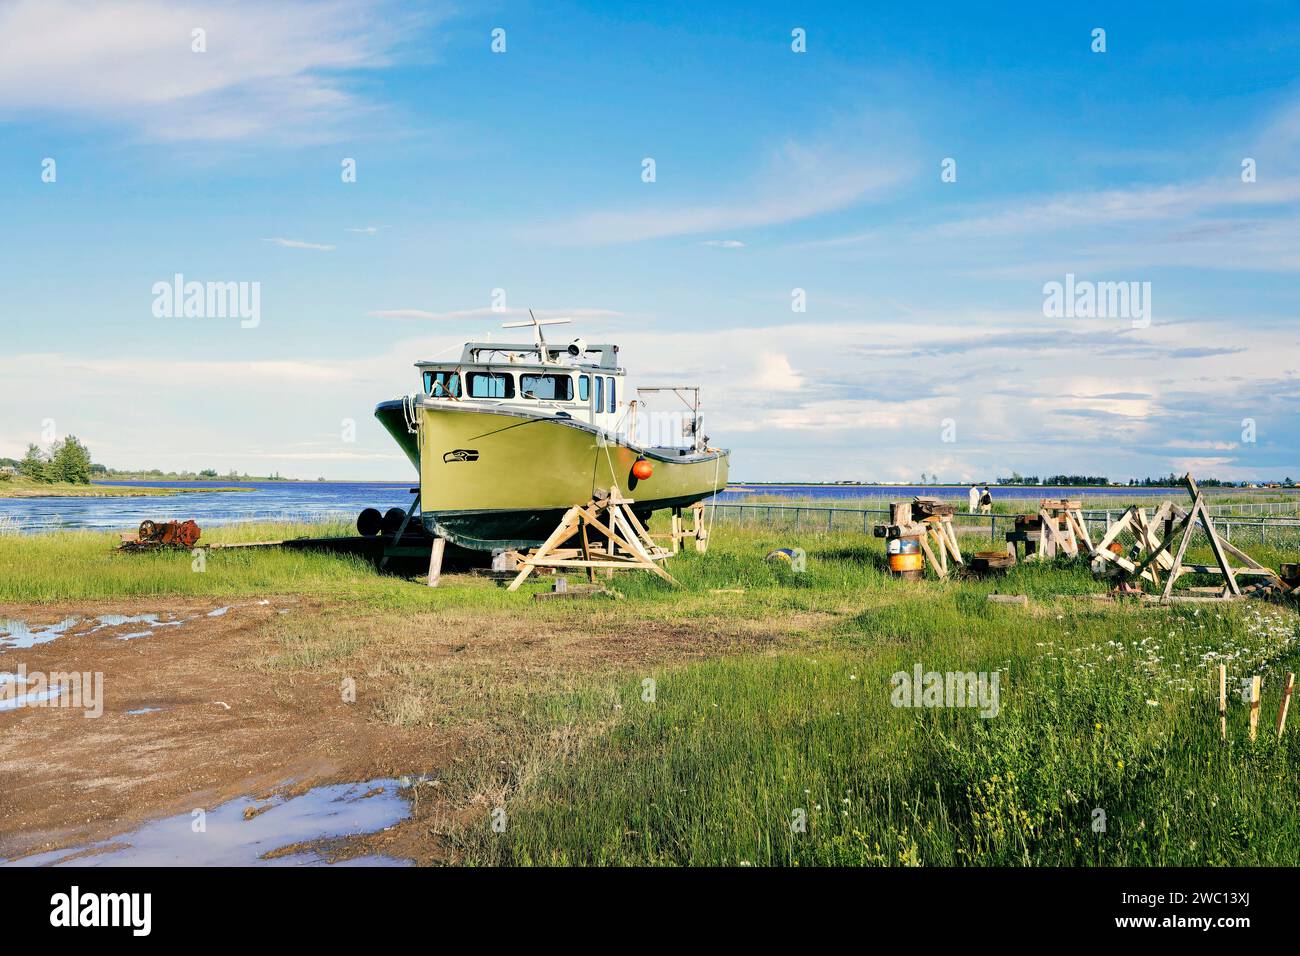 bateau de pêche vert en Cale sèche posé dans l'herbe Stockfoto